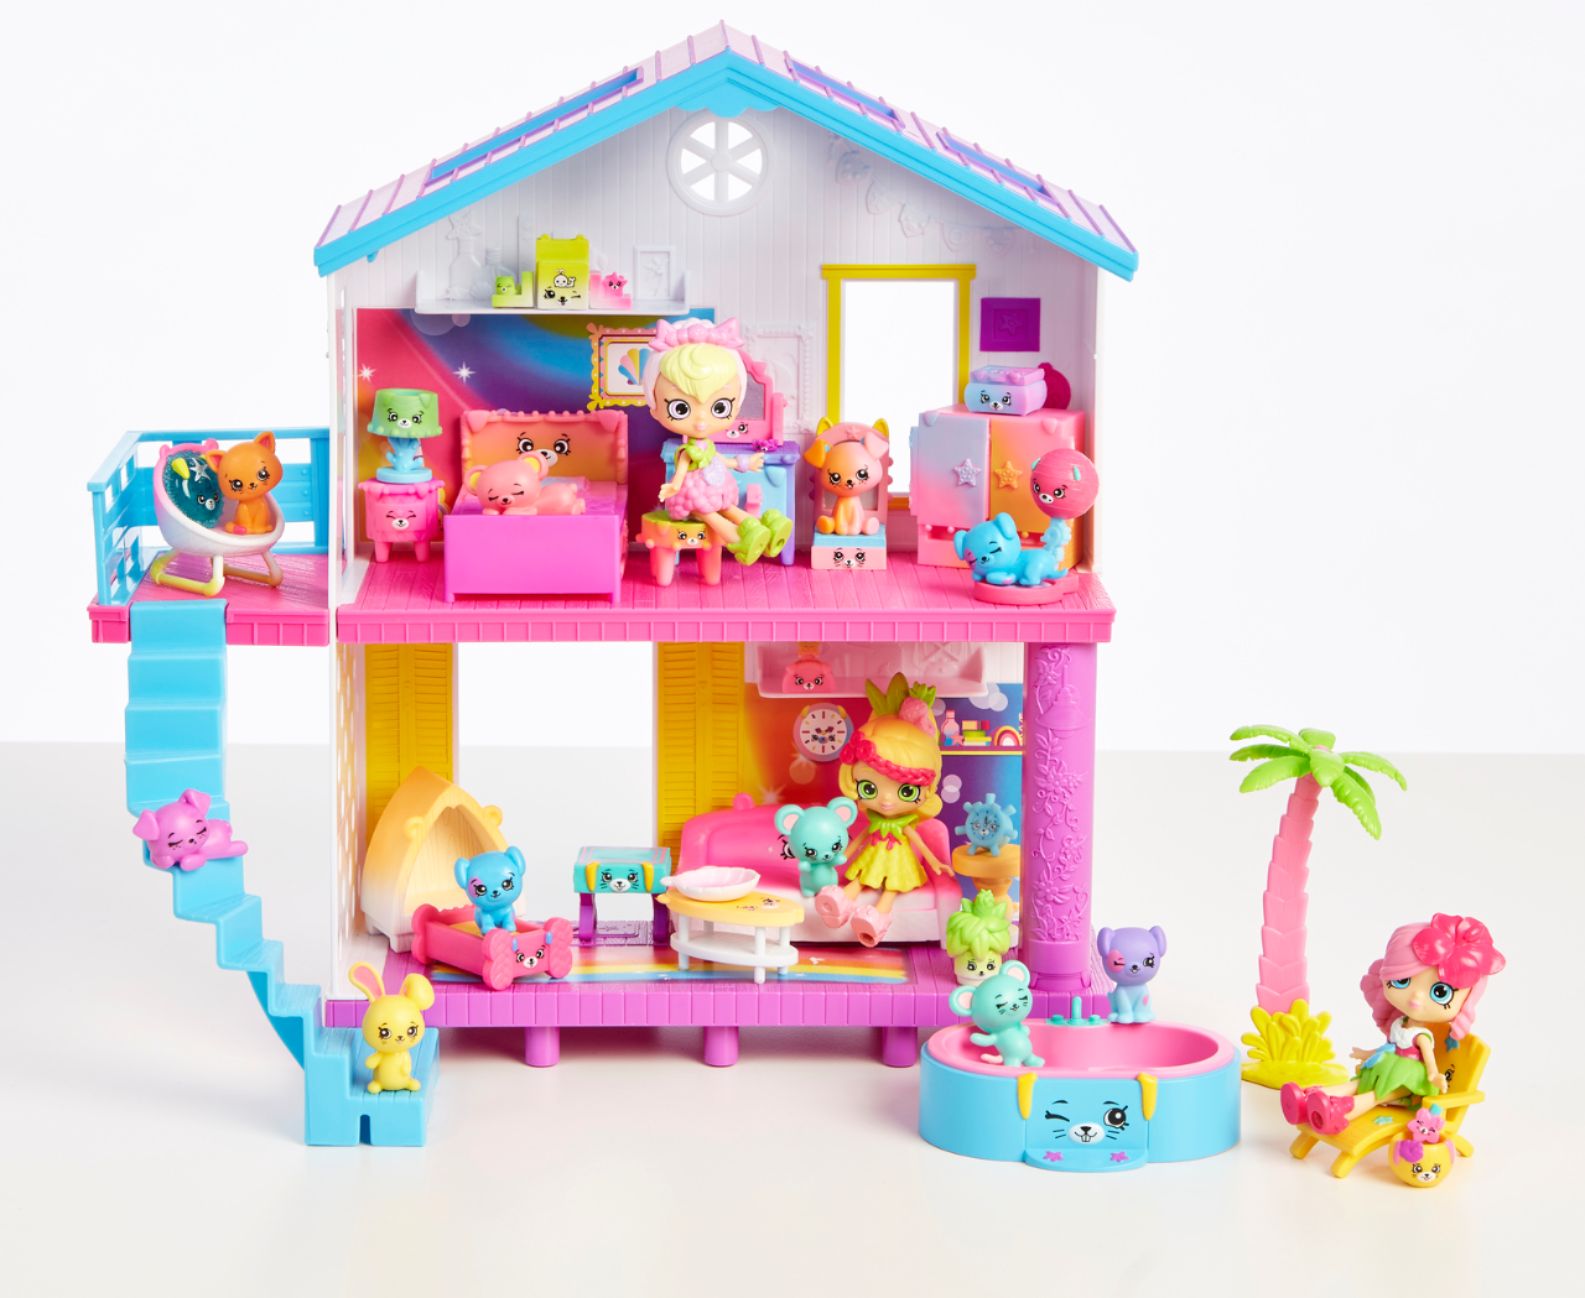 Best Buy: Shopkins Happy Places™ Happy Beach House 56860